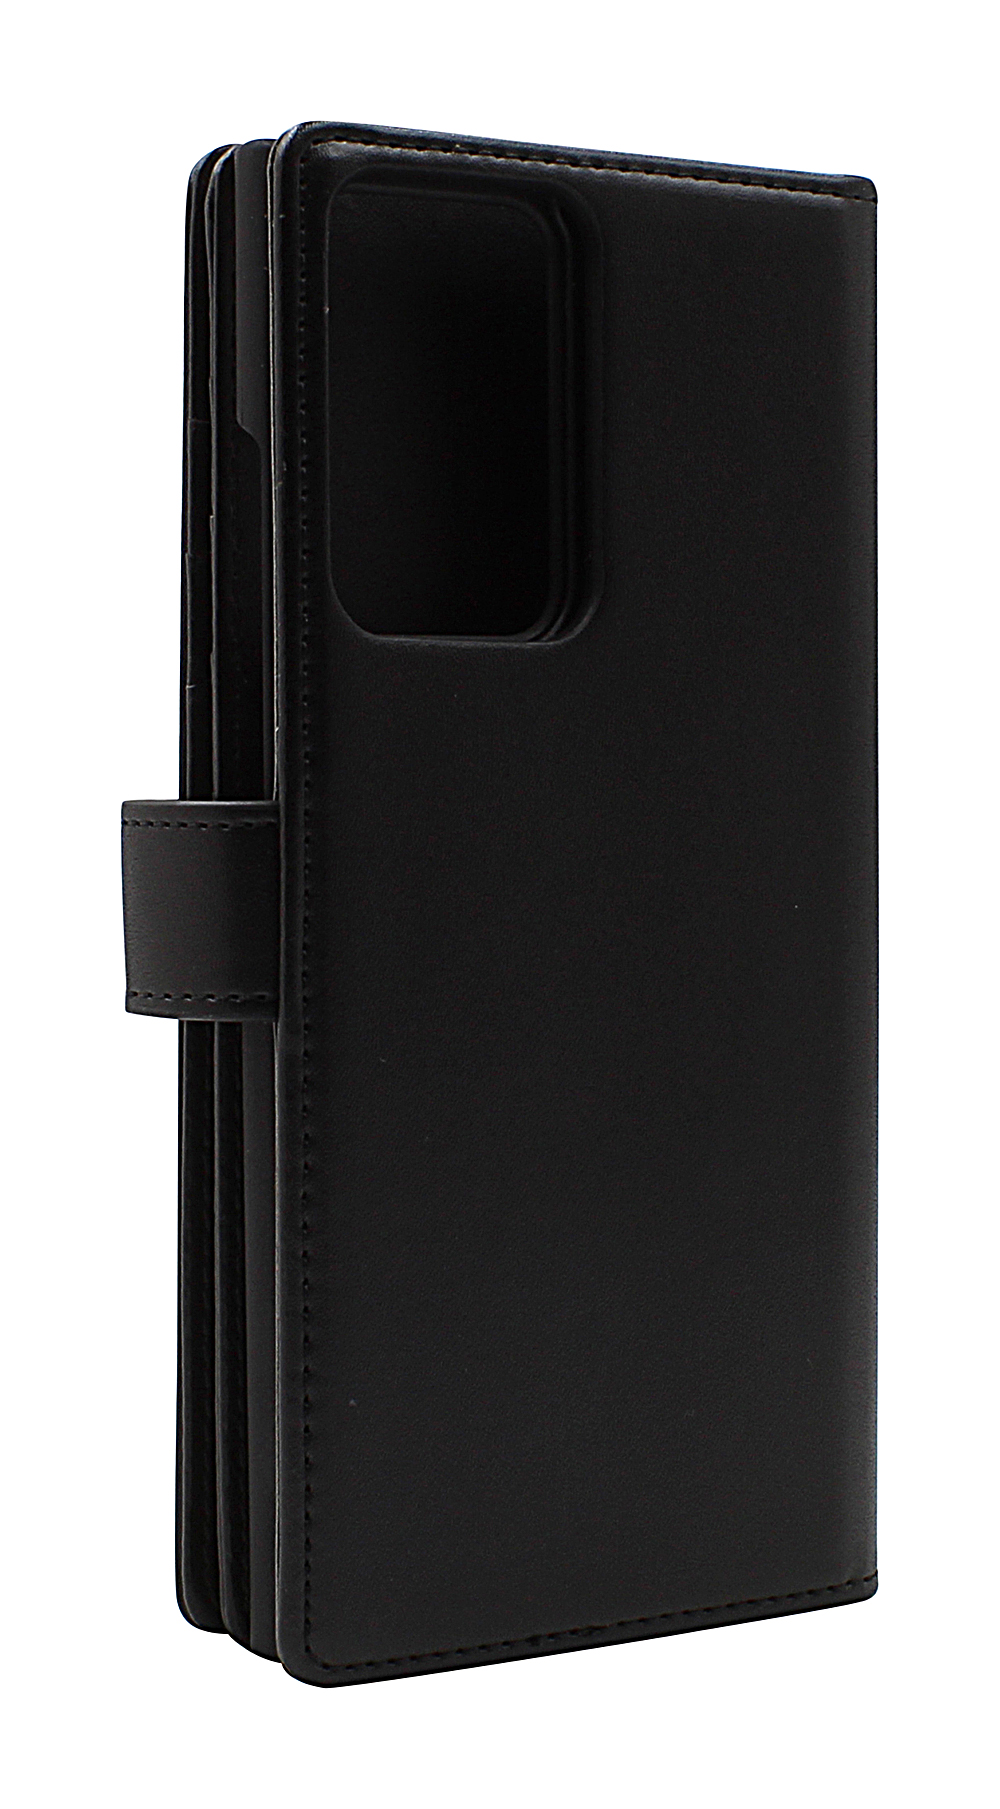 CoverInSkimblocker XL Magnet Fodral Samsung Galaxy Note 20 Ultra 5G (N986B/DS)